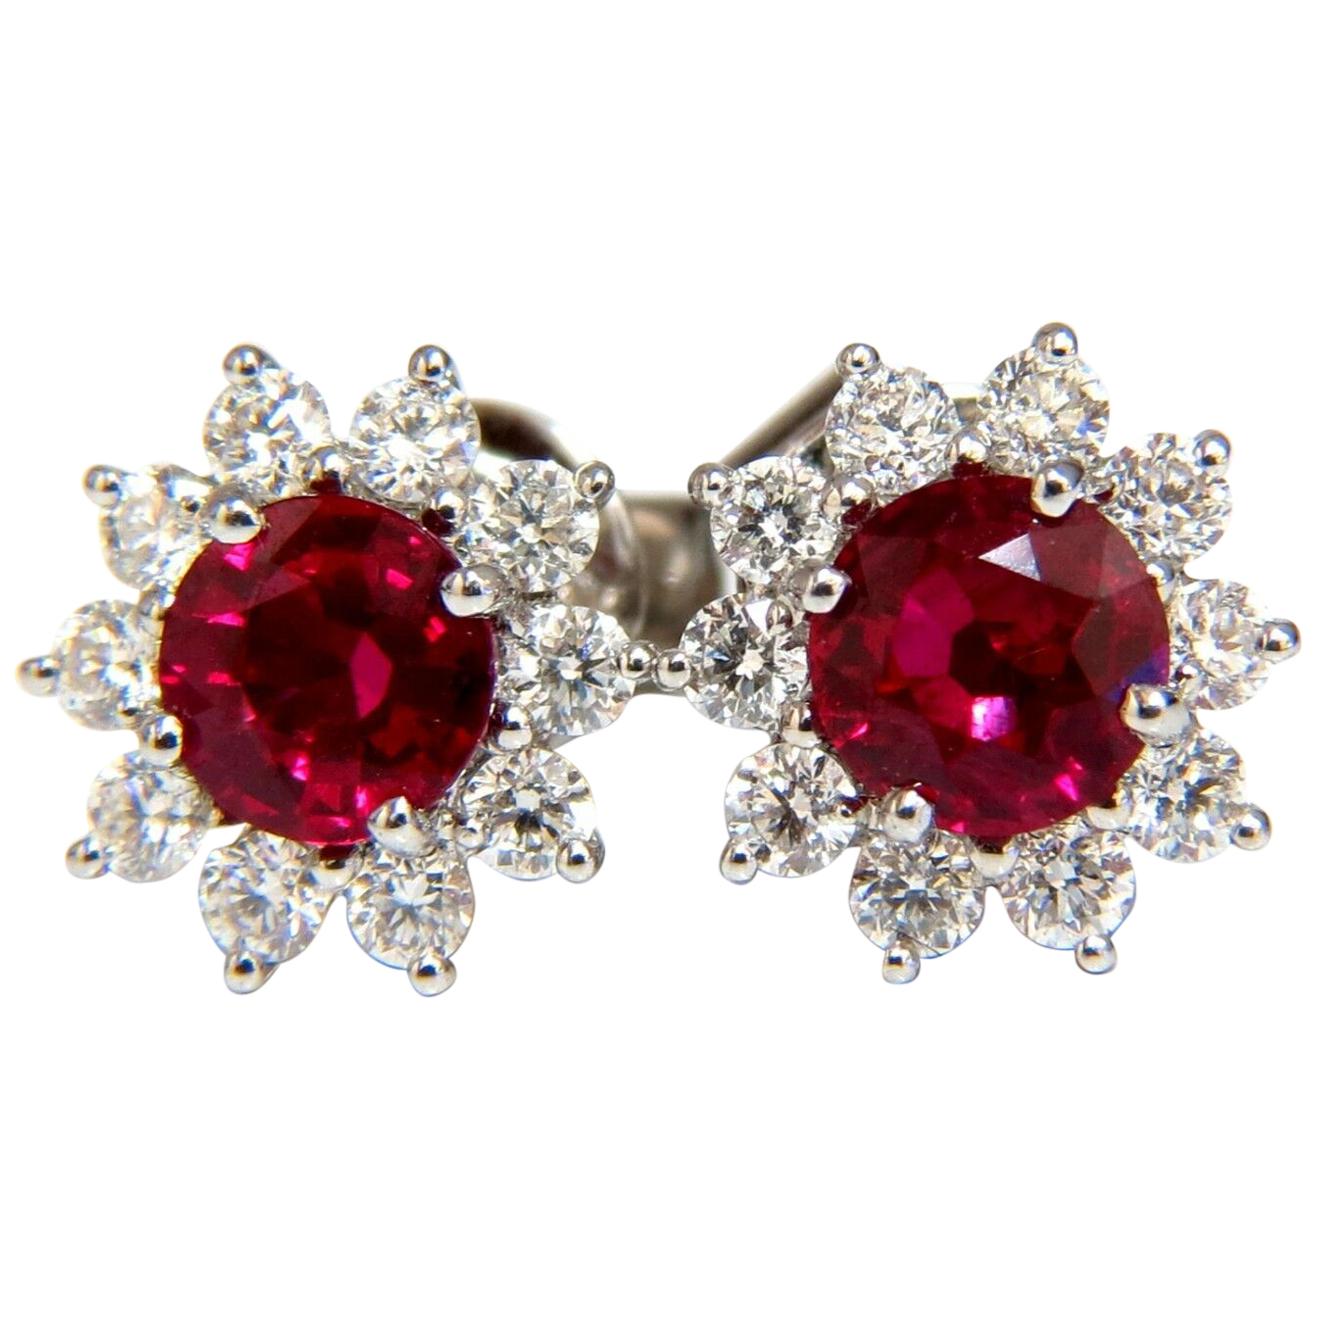 1.68 Carat Natural Burma Ruby Diamonds Cluster Earrings 14 Karat